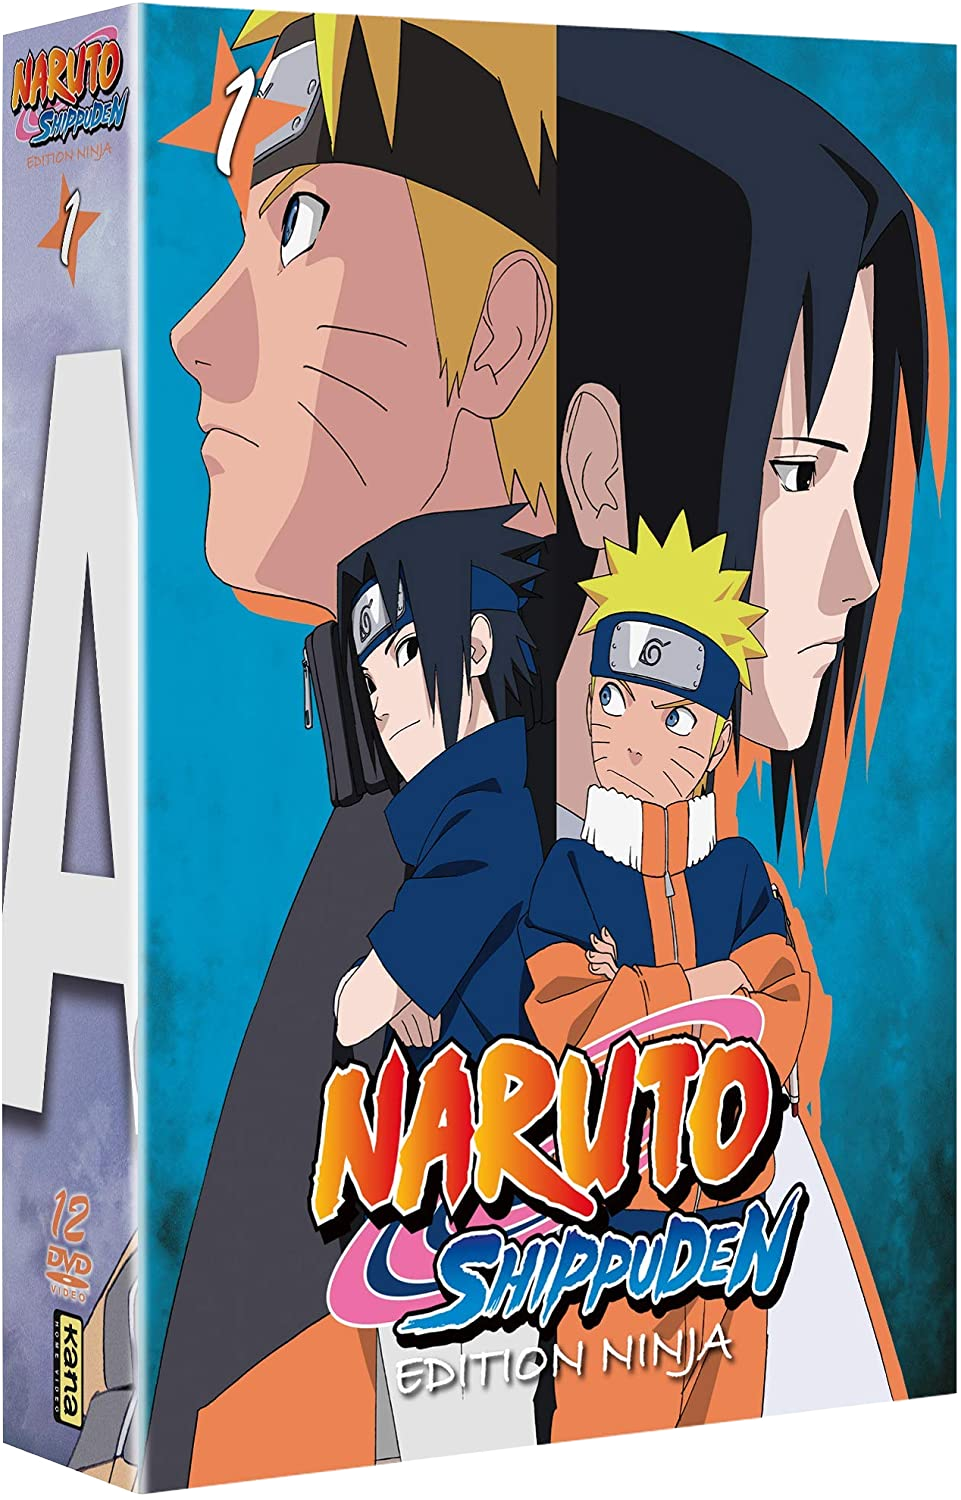 Naruto Shippuden - Édition Ninja Coffret 1 [12 DVD]